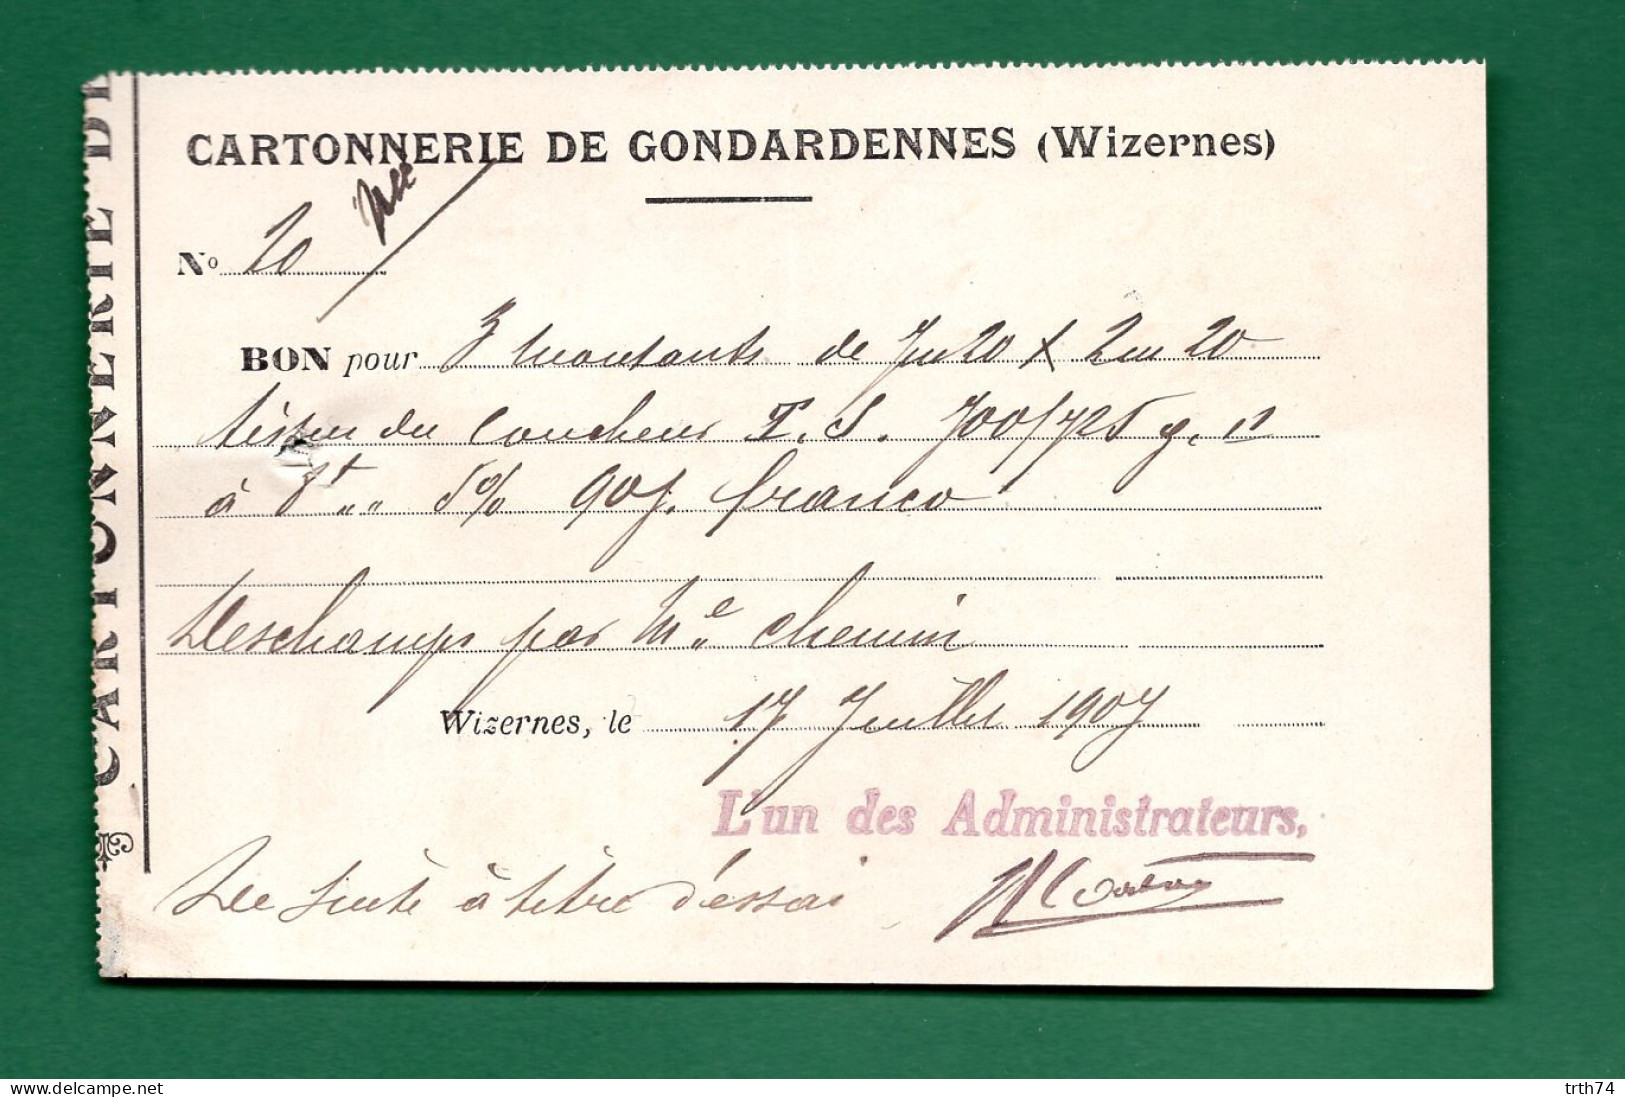 62 Wizernes Cartonnerie De Gondardennes 17 Juillet 1907 - Imprenta & Papelería